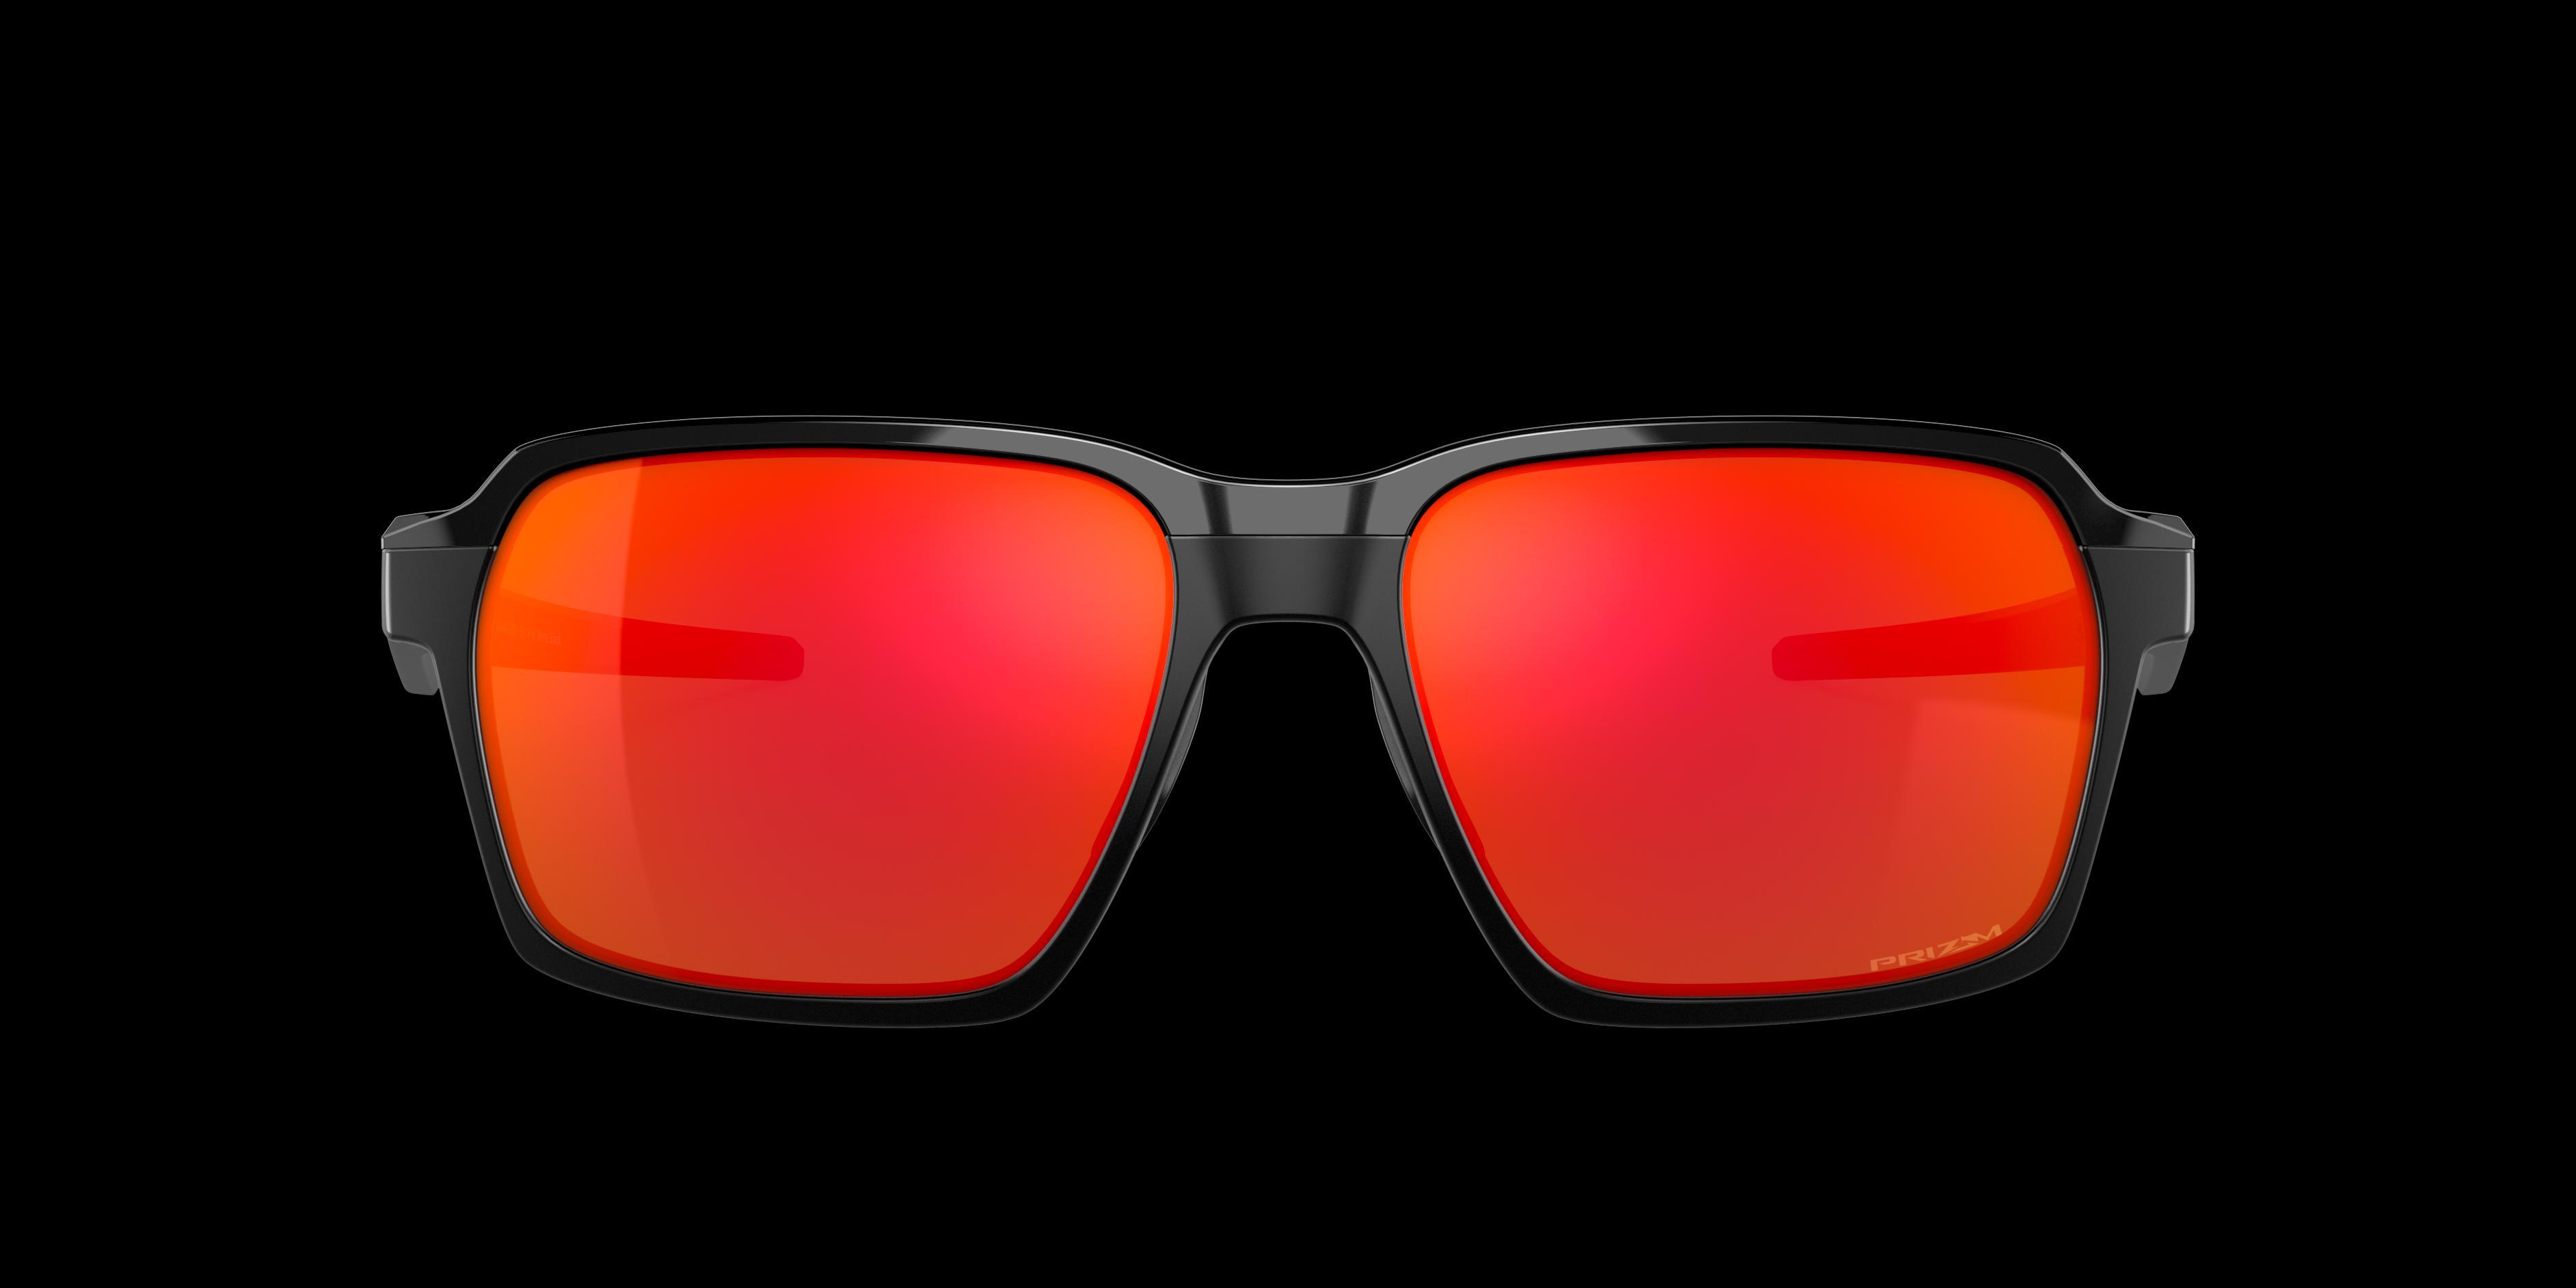 Oakley 58mm Rectangle Sunglasses Product Image